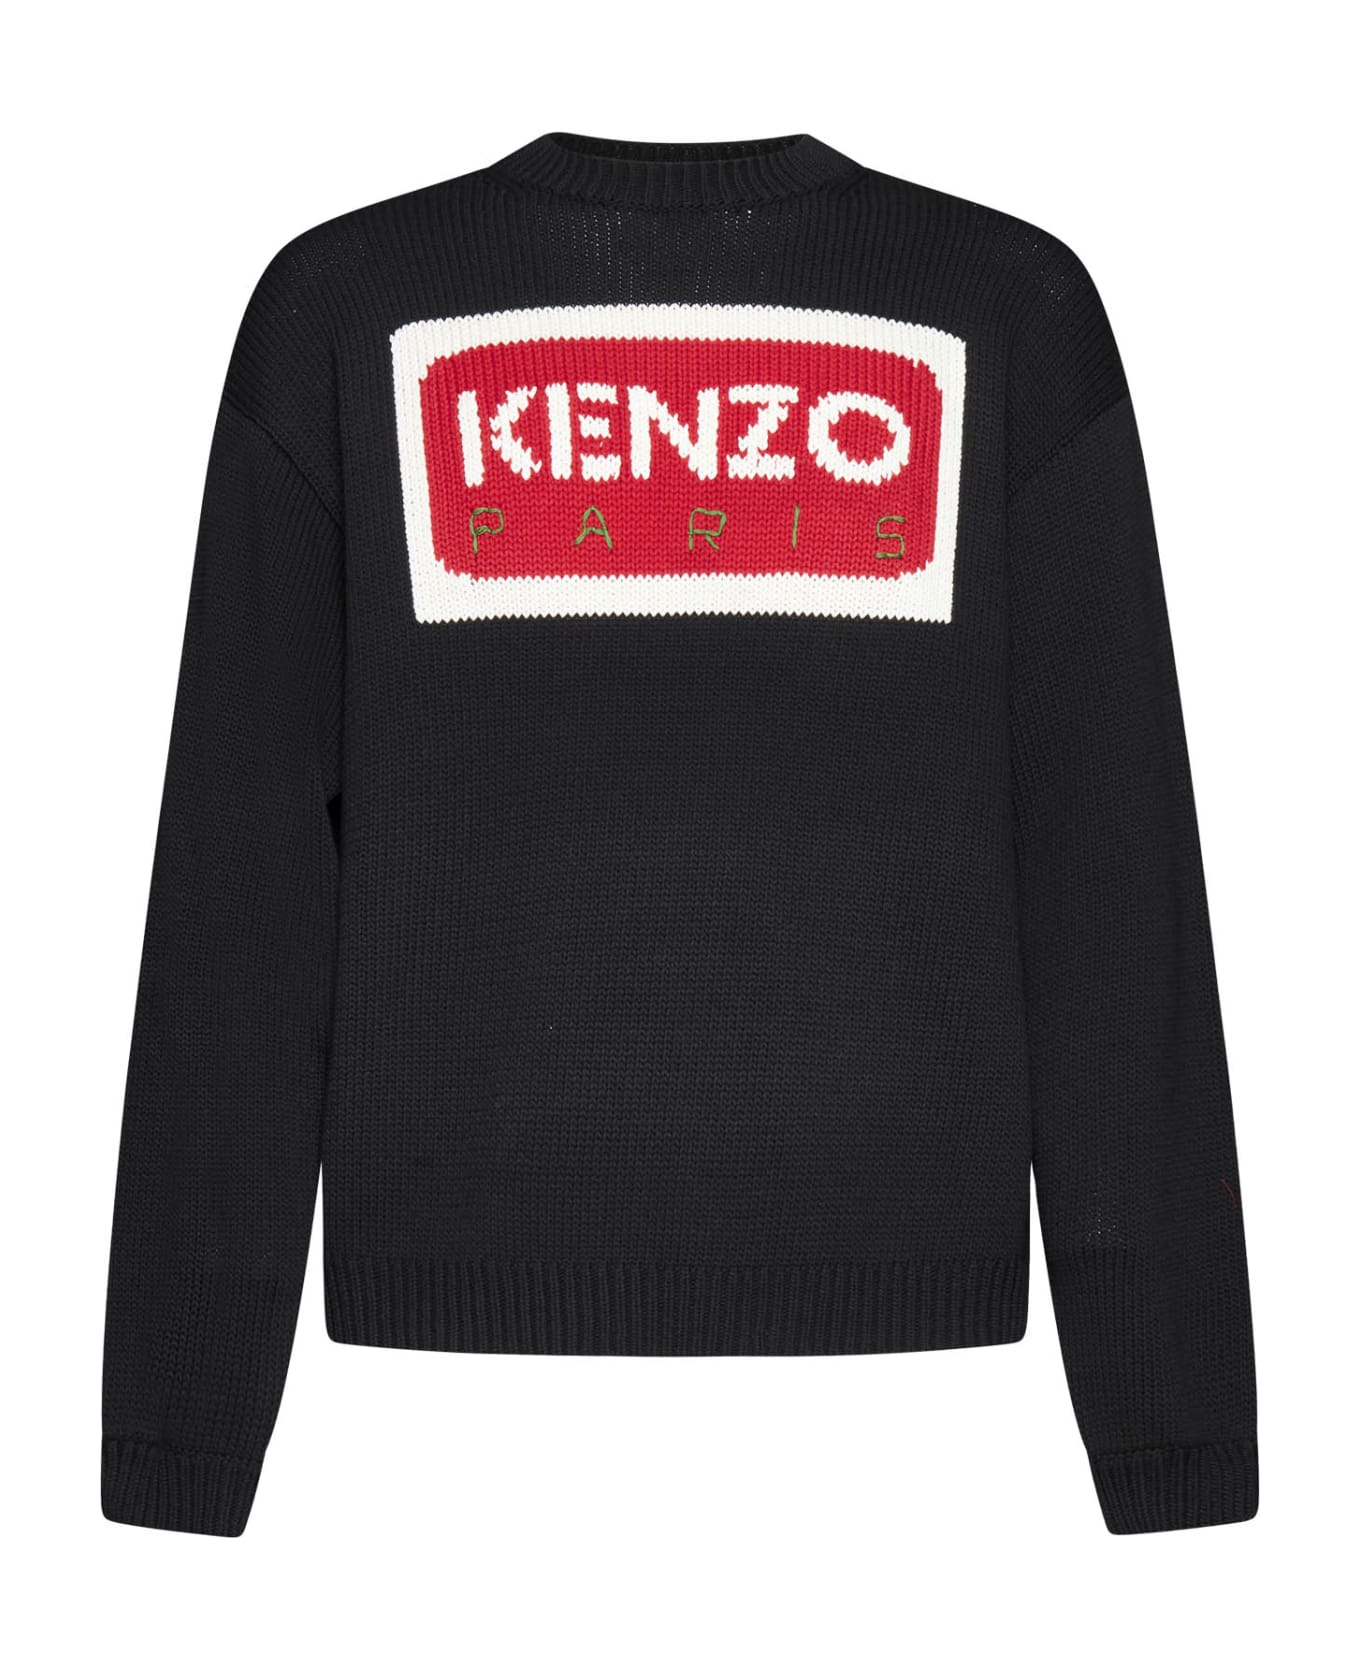 Kenzo ' Paris' Sweater - Black